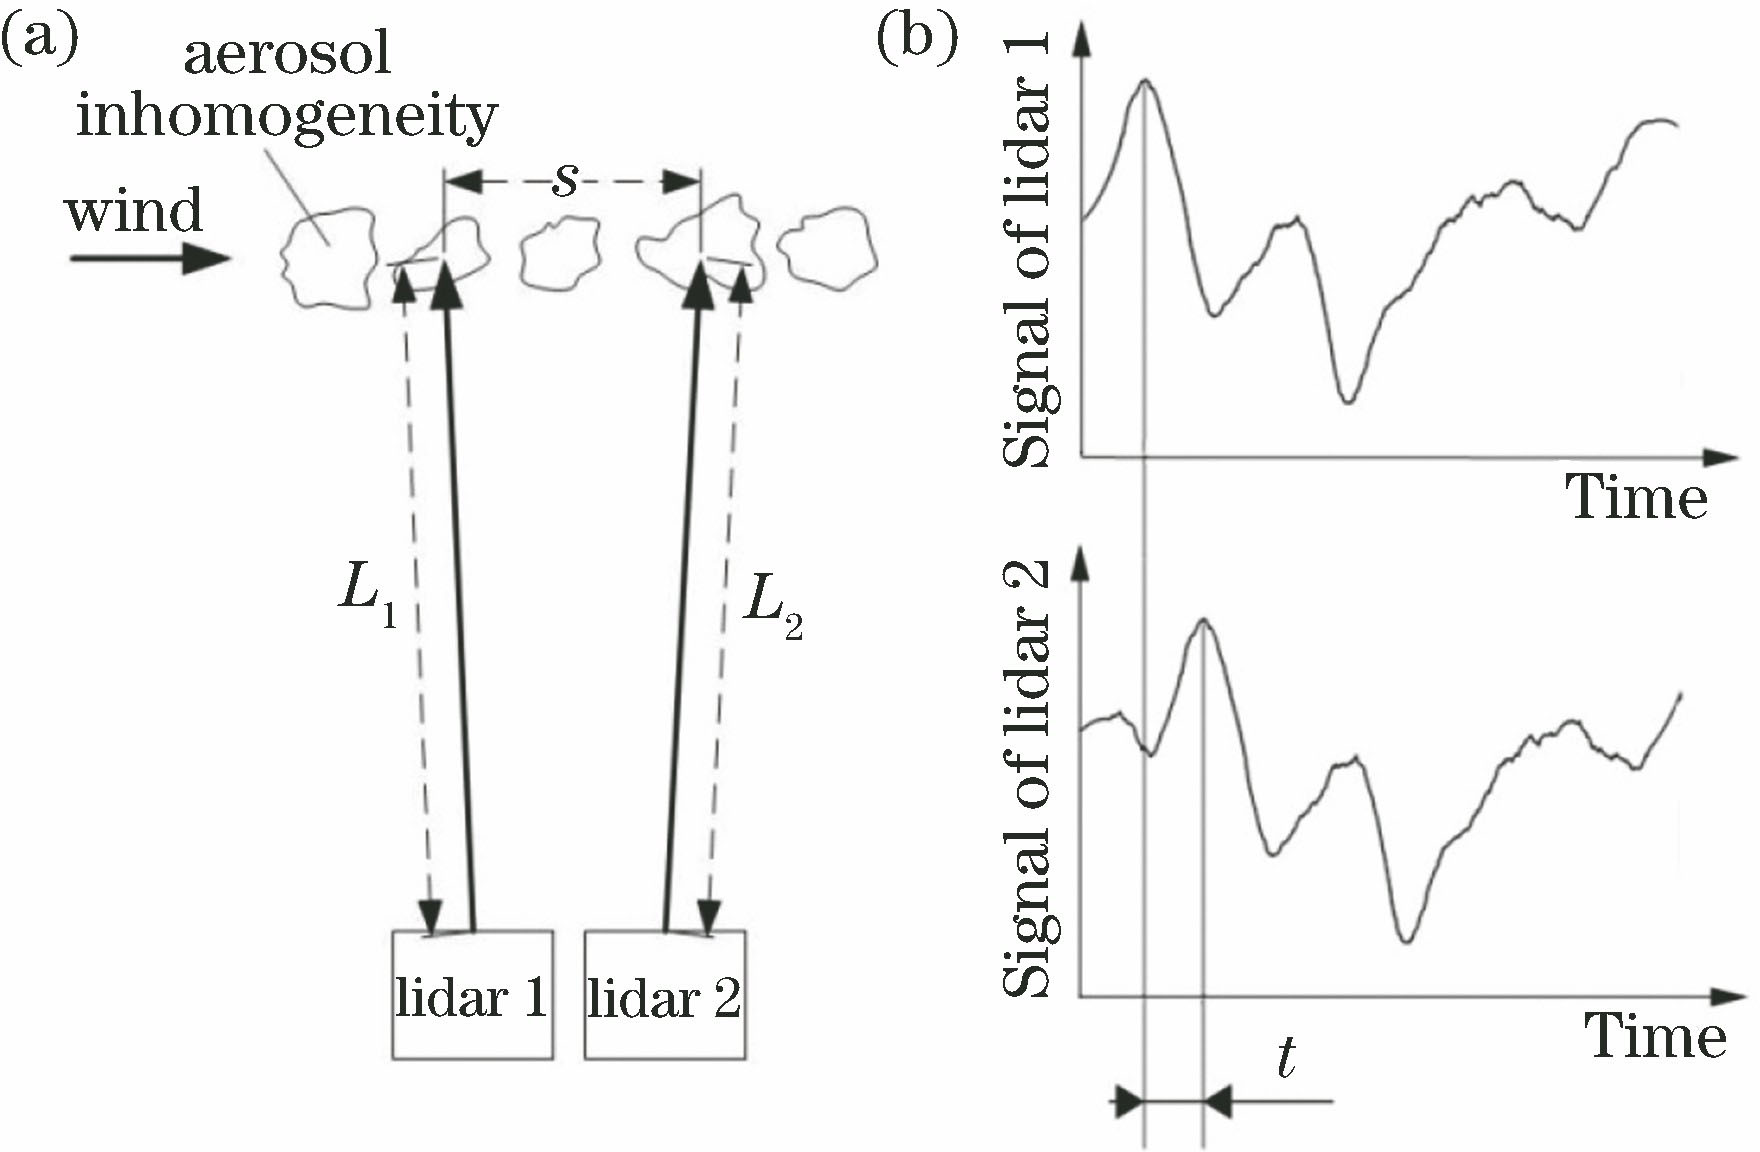 Schematic of wind measurement based on lidar echo correlation. (a) Measurement of aerosol inhomogeneity by lidar; (b) signal curves of lidar 1 at distance of L1 and lidar 2 at distance of L2